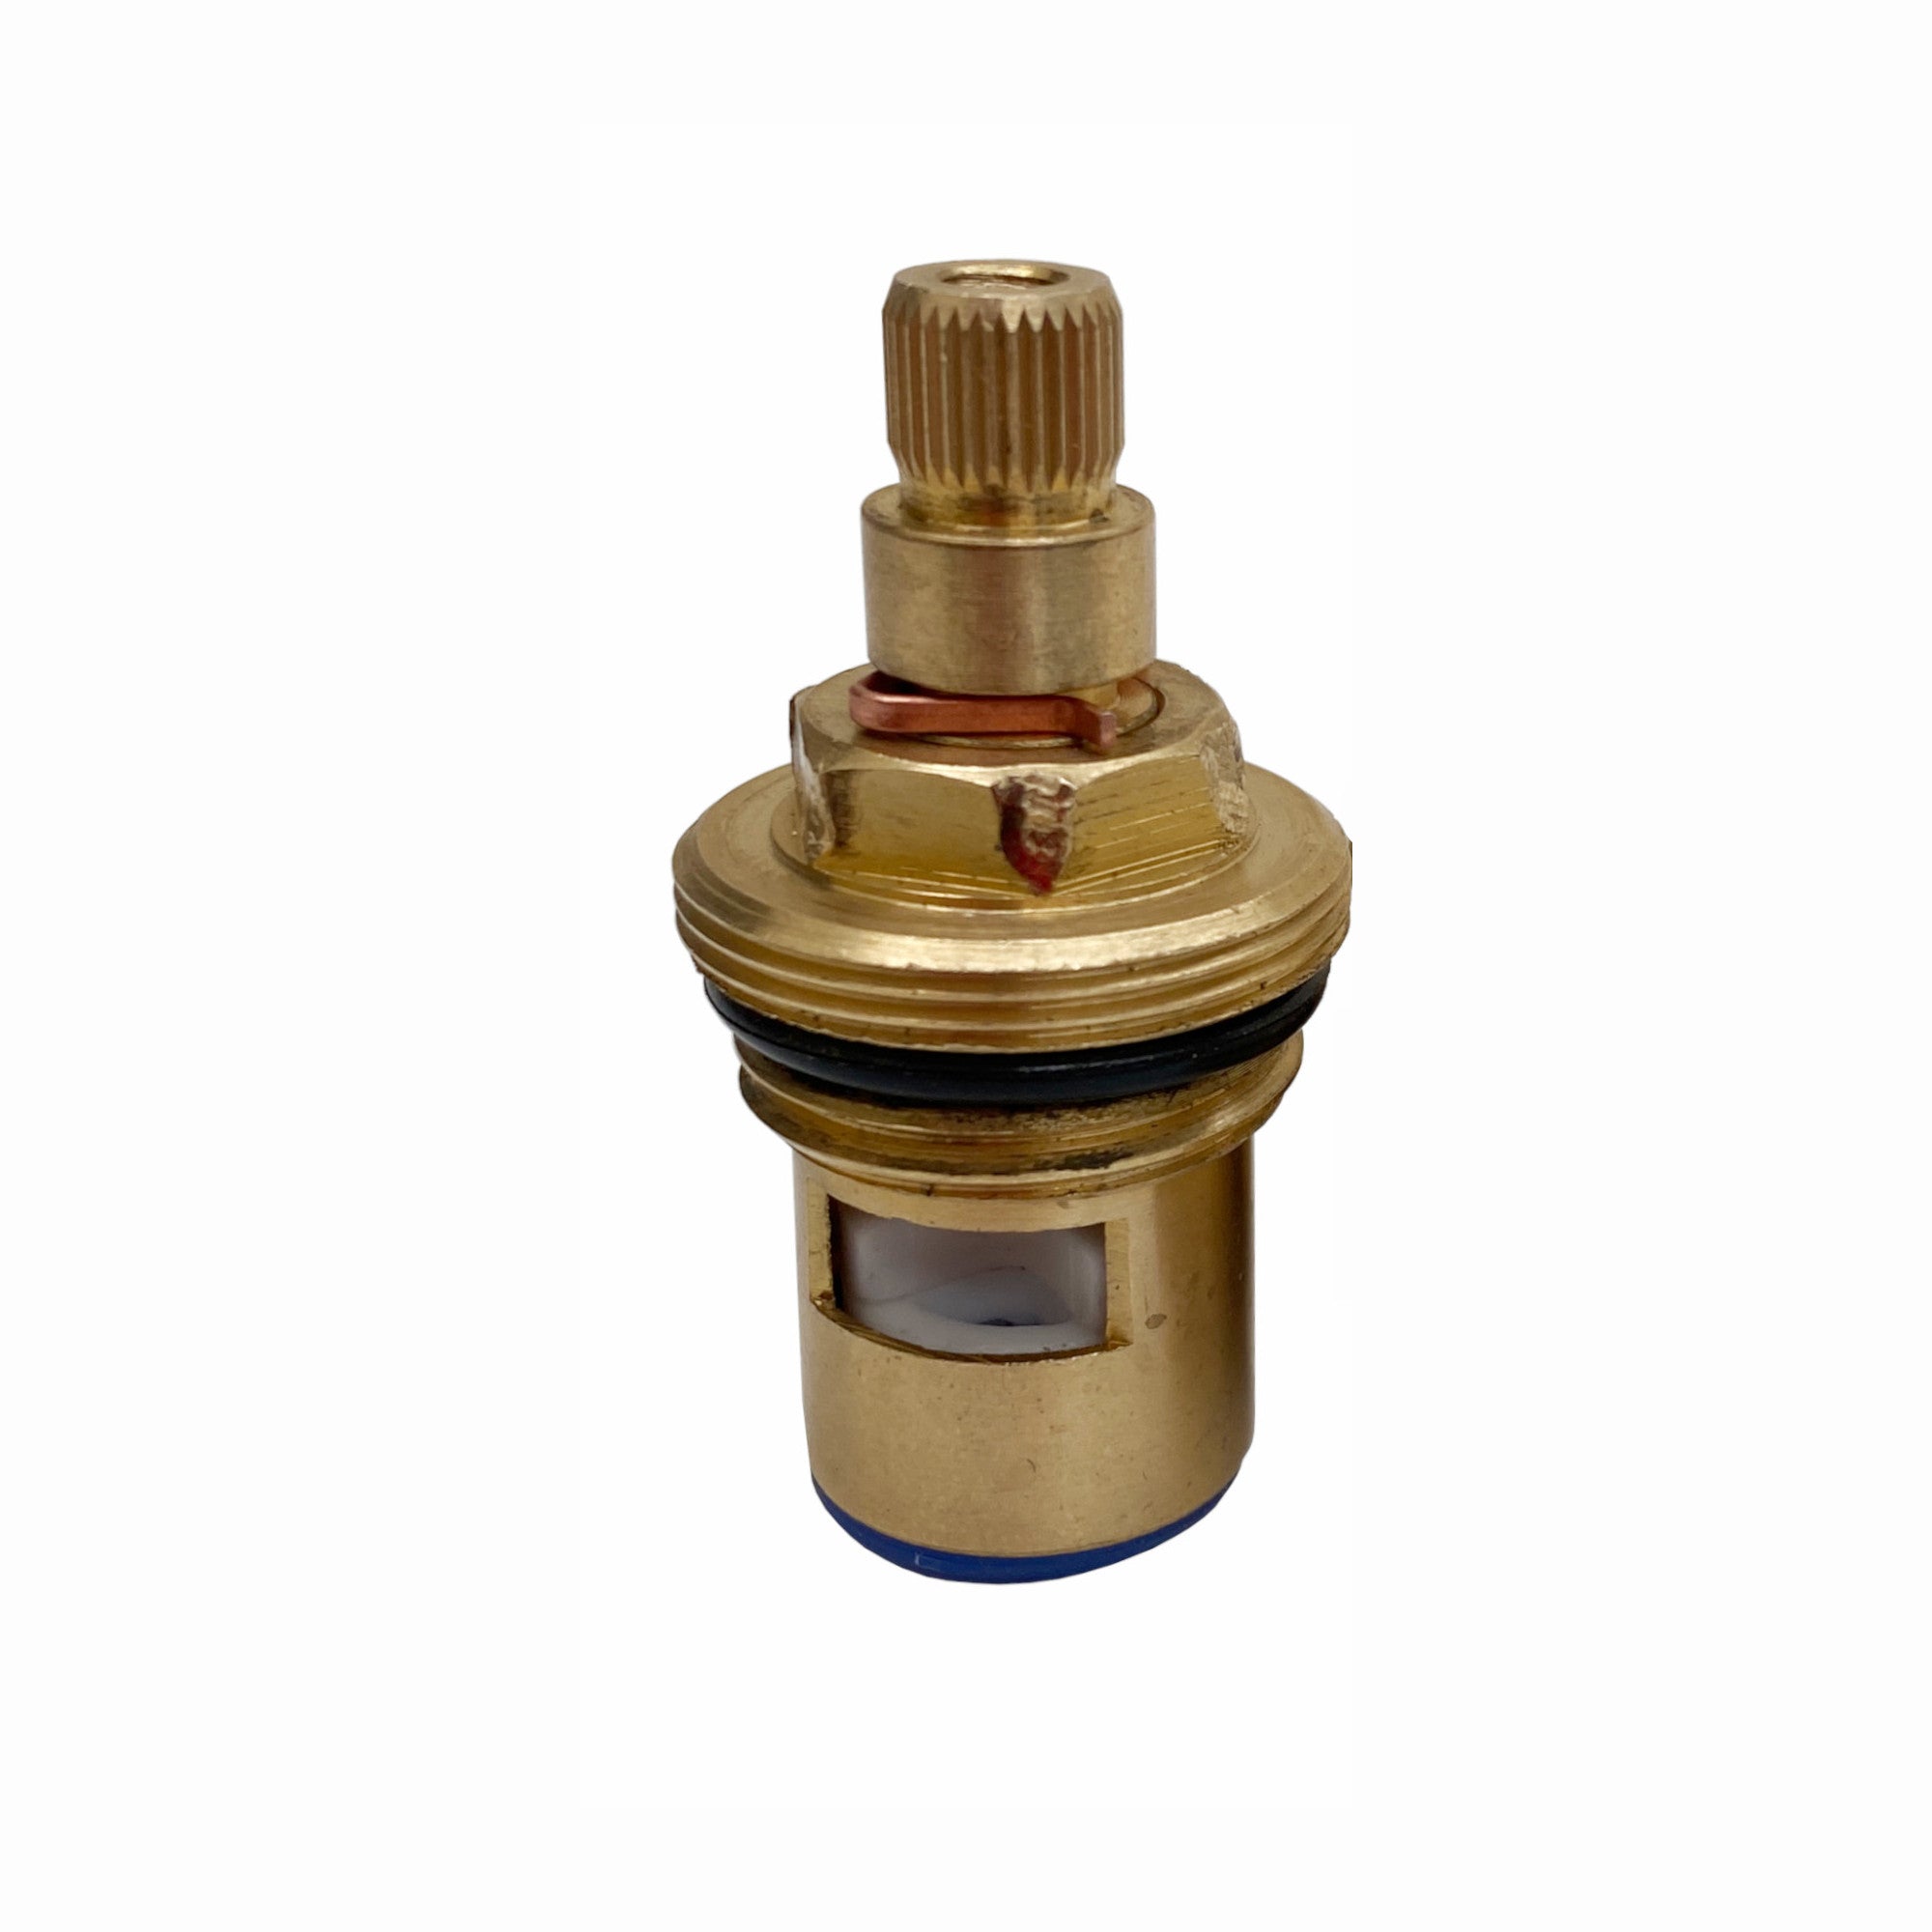 Ceramic disc brass valve 1/2", quarter turn - Astbury, Brompton - COLD